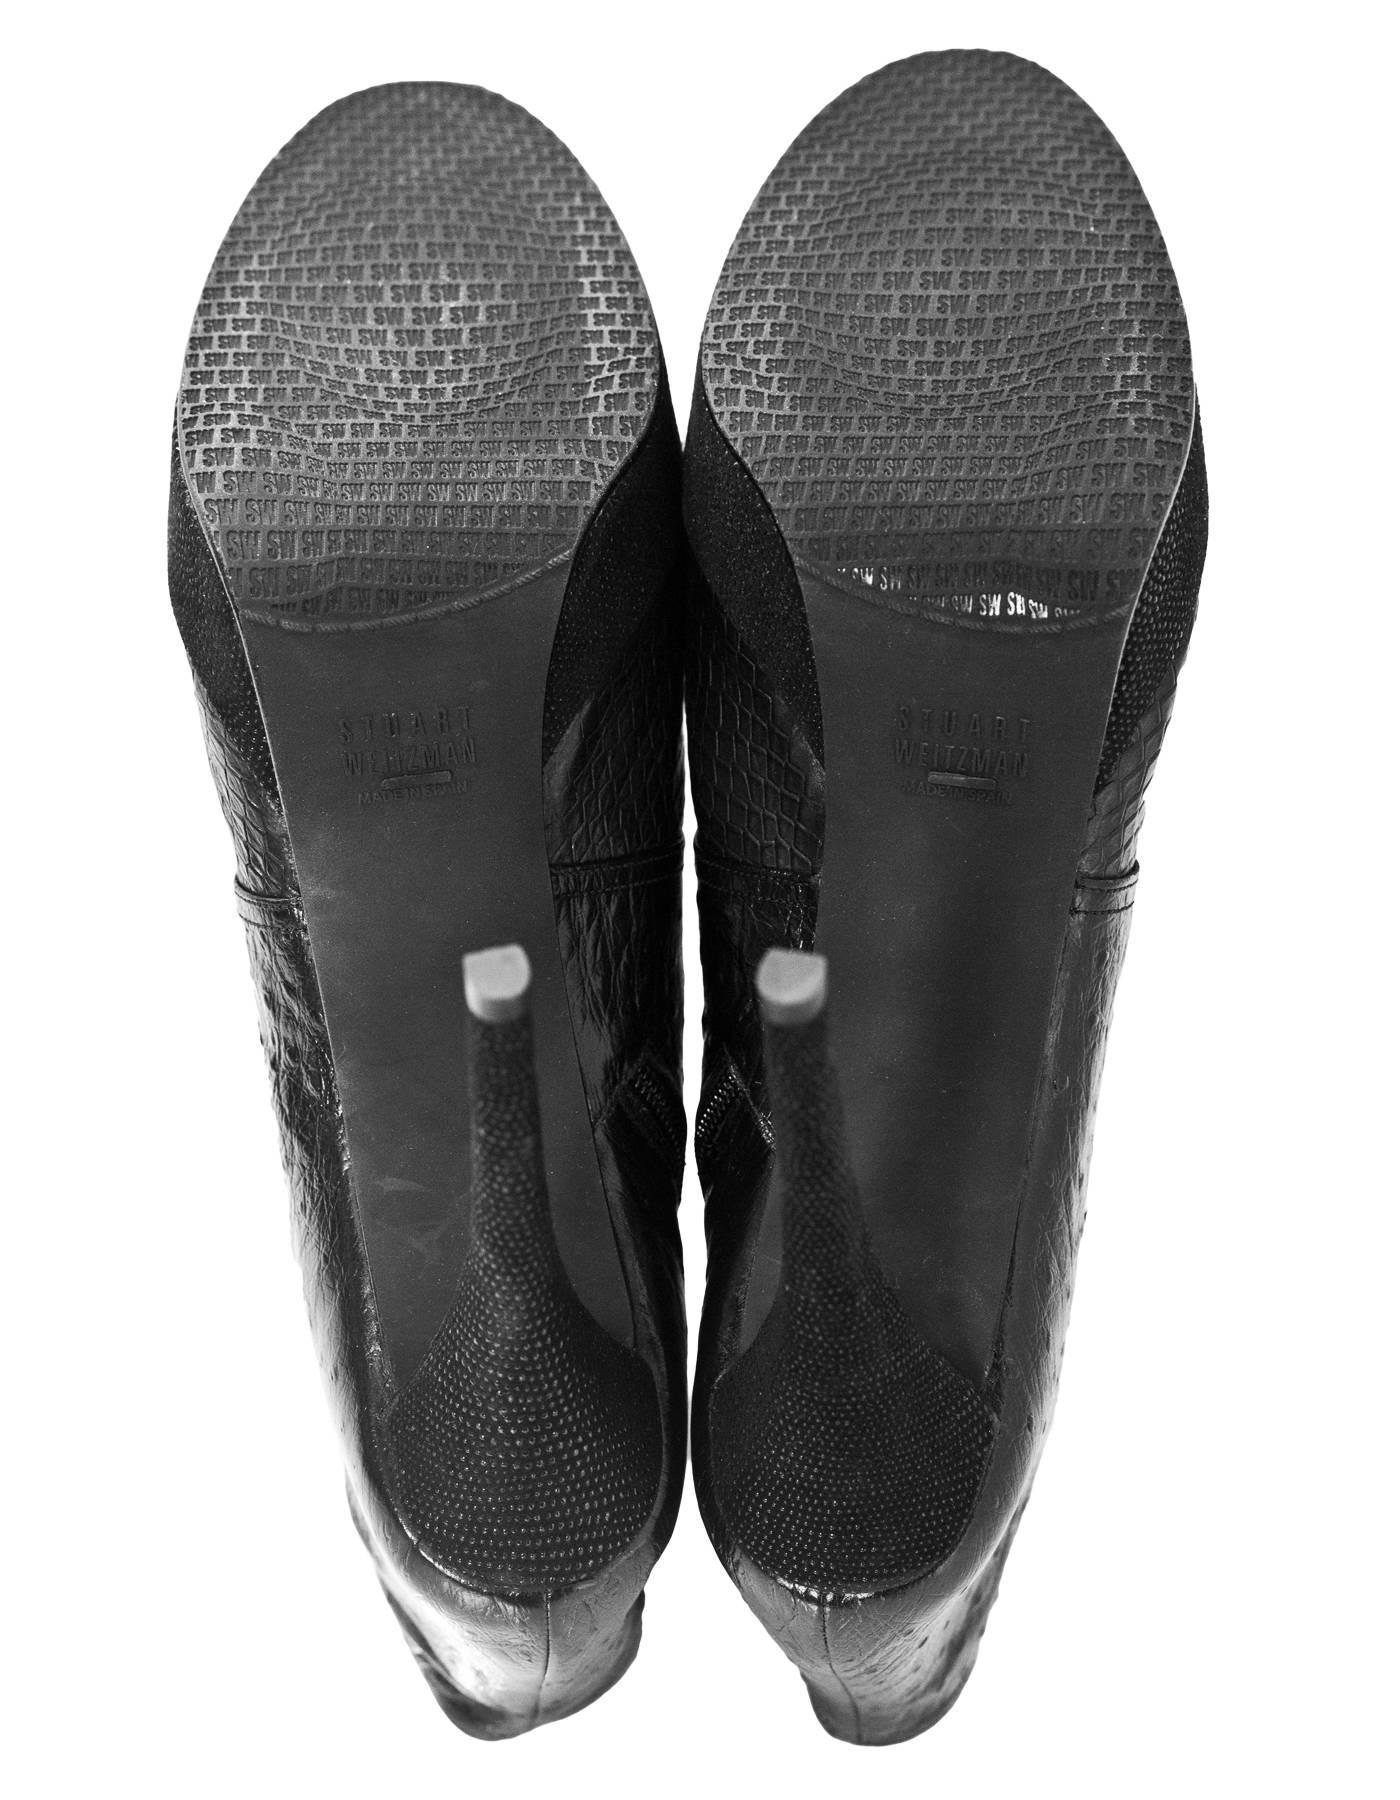 Stuart Weitzman Black Melange Ankle Boots Sz 11 with Box and DB 1